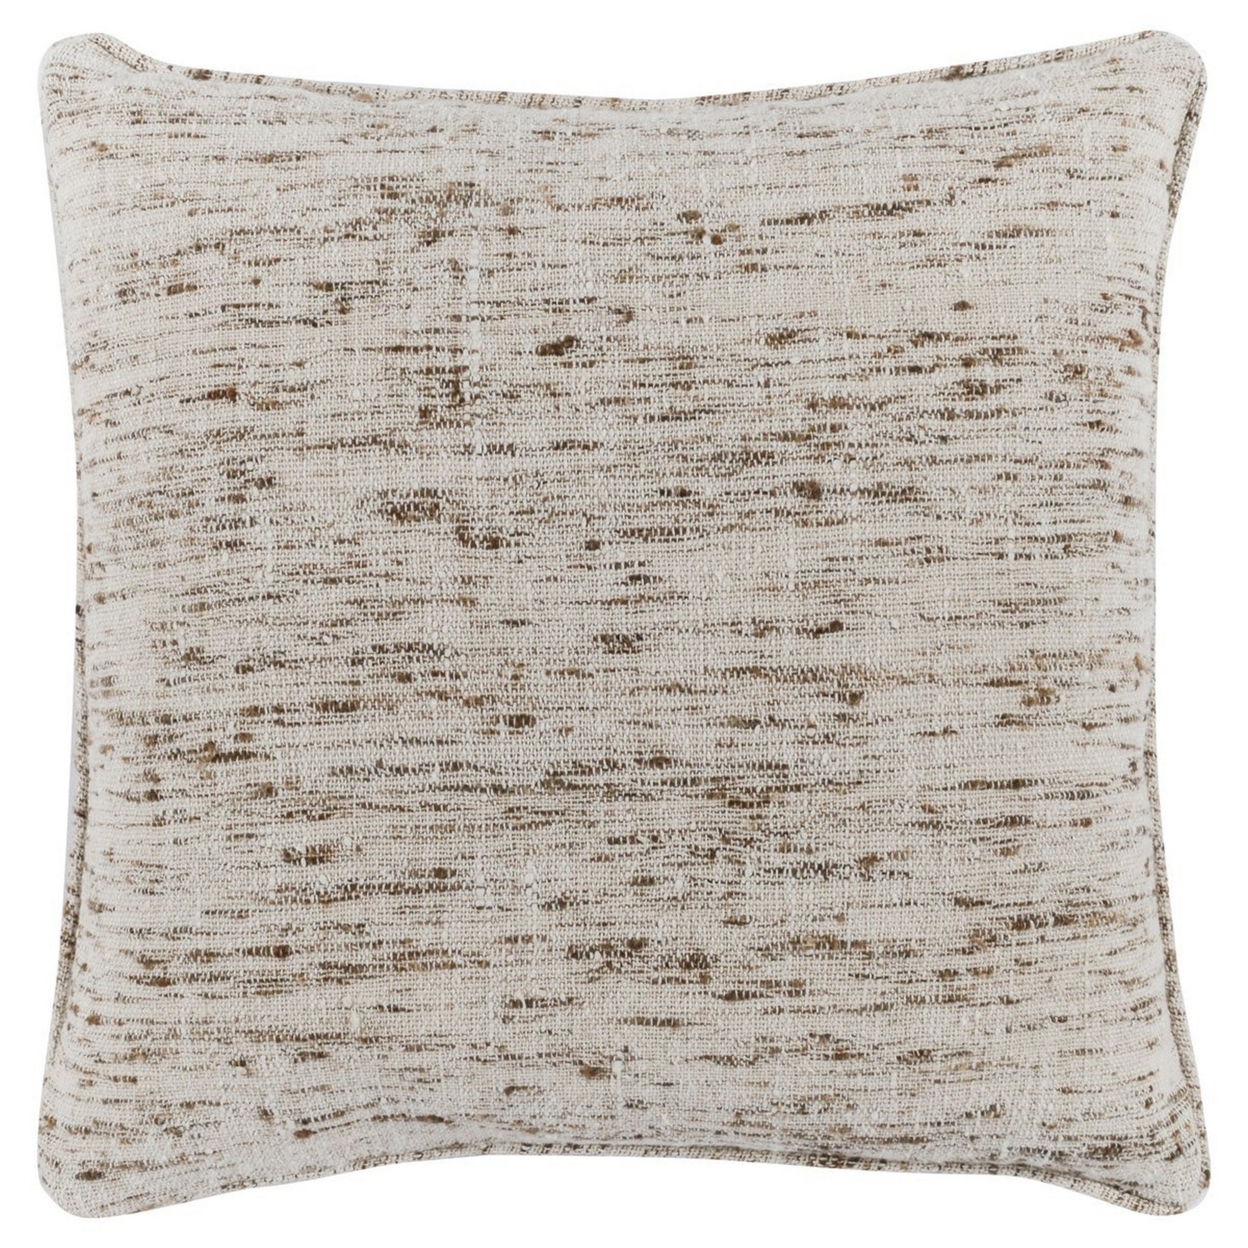 22 X 22 Accent Throw Pillow, Down Insert, Handwoven Textured Design, Beige- Saltoro Sherpi